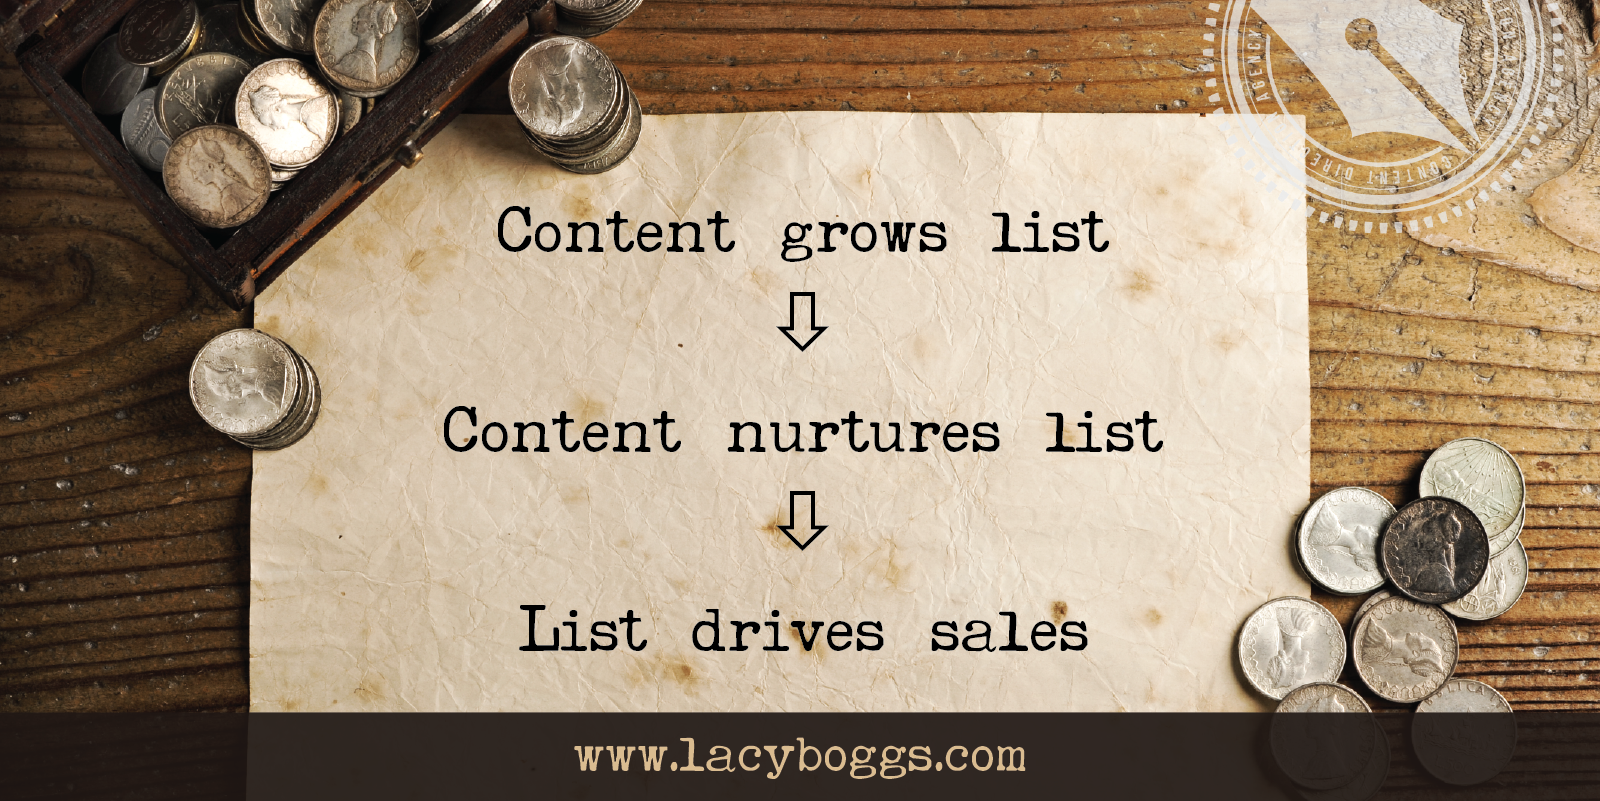 content drives sales